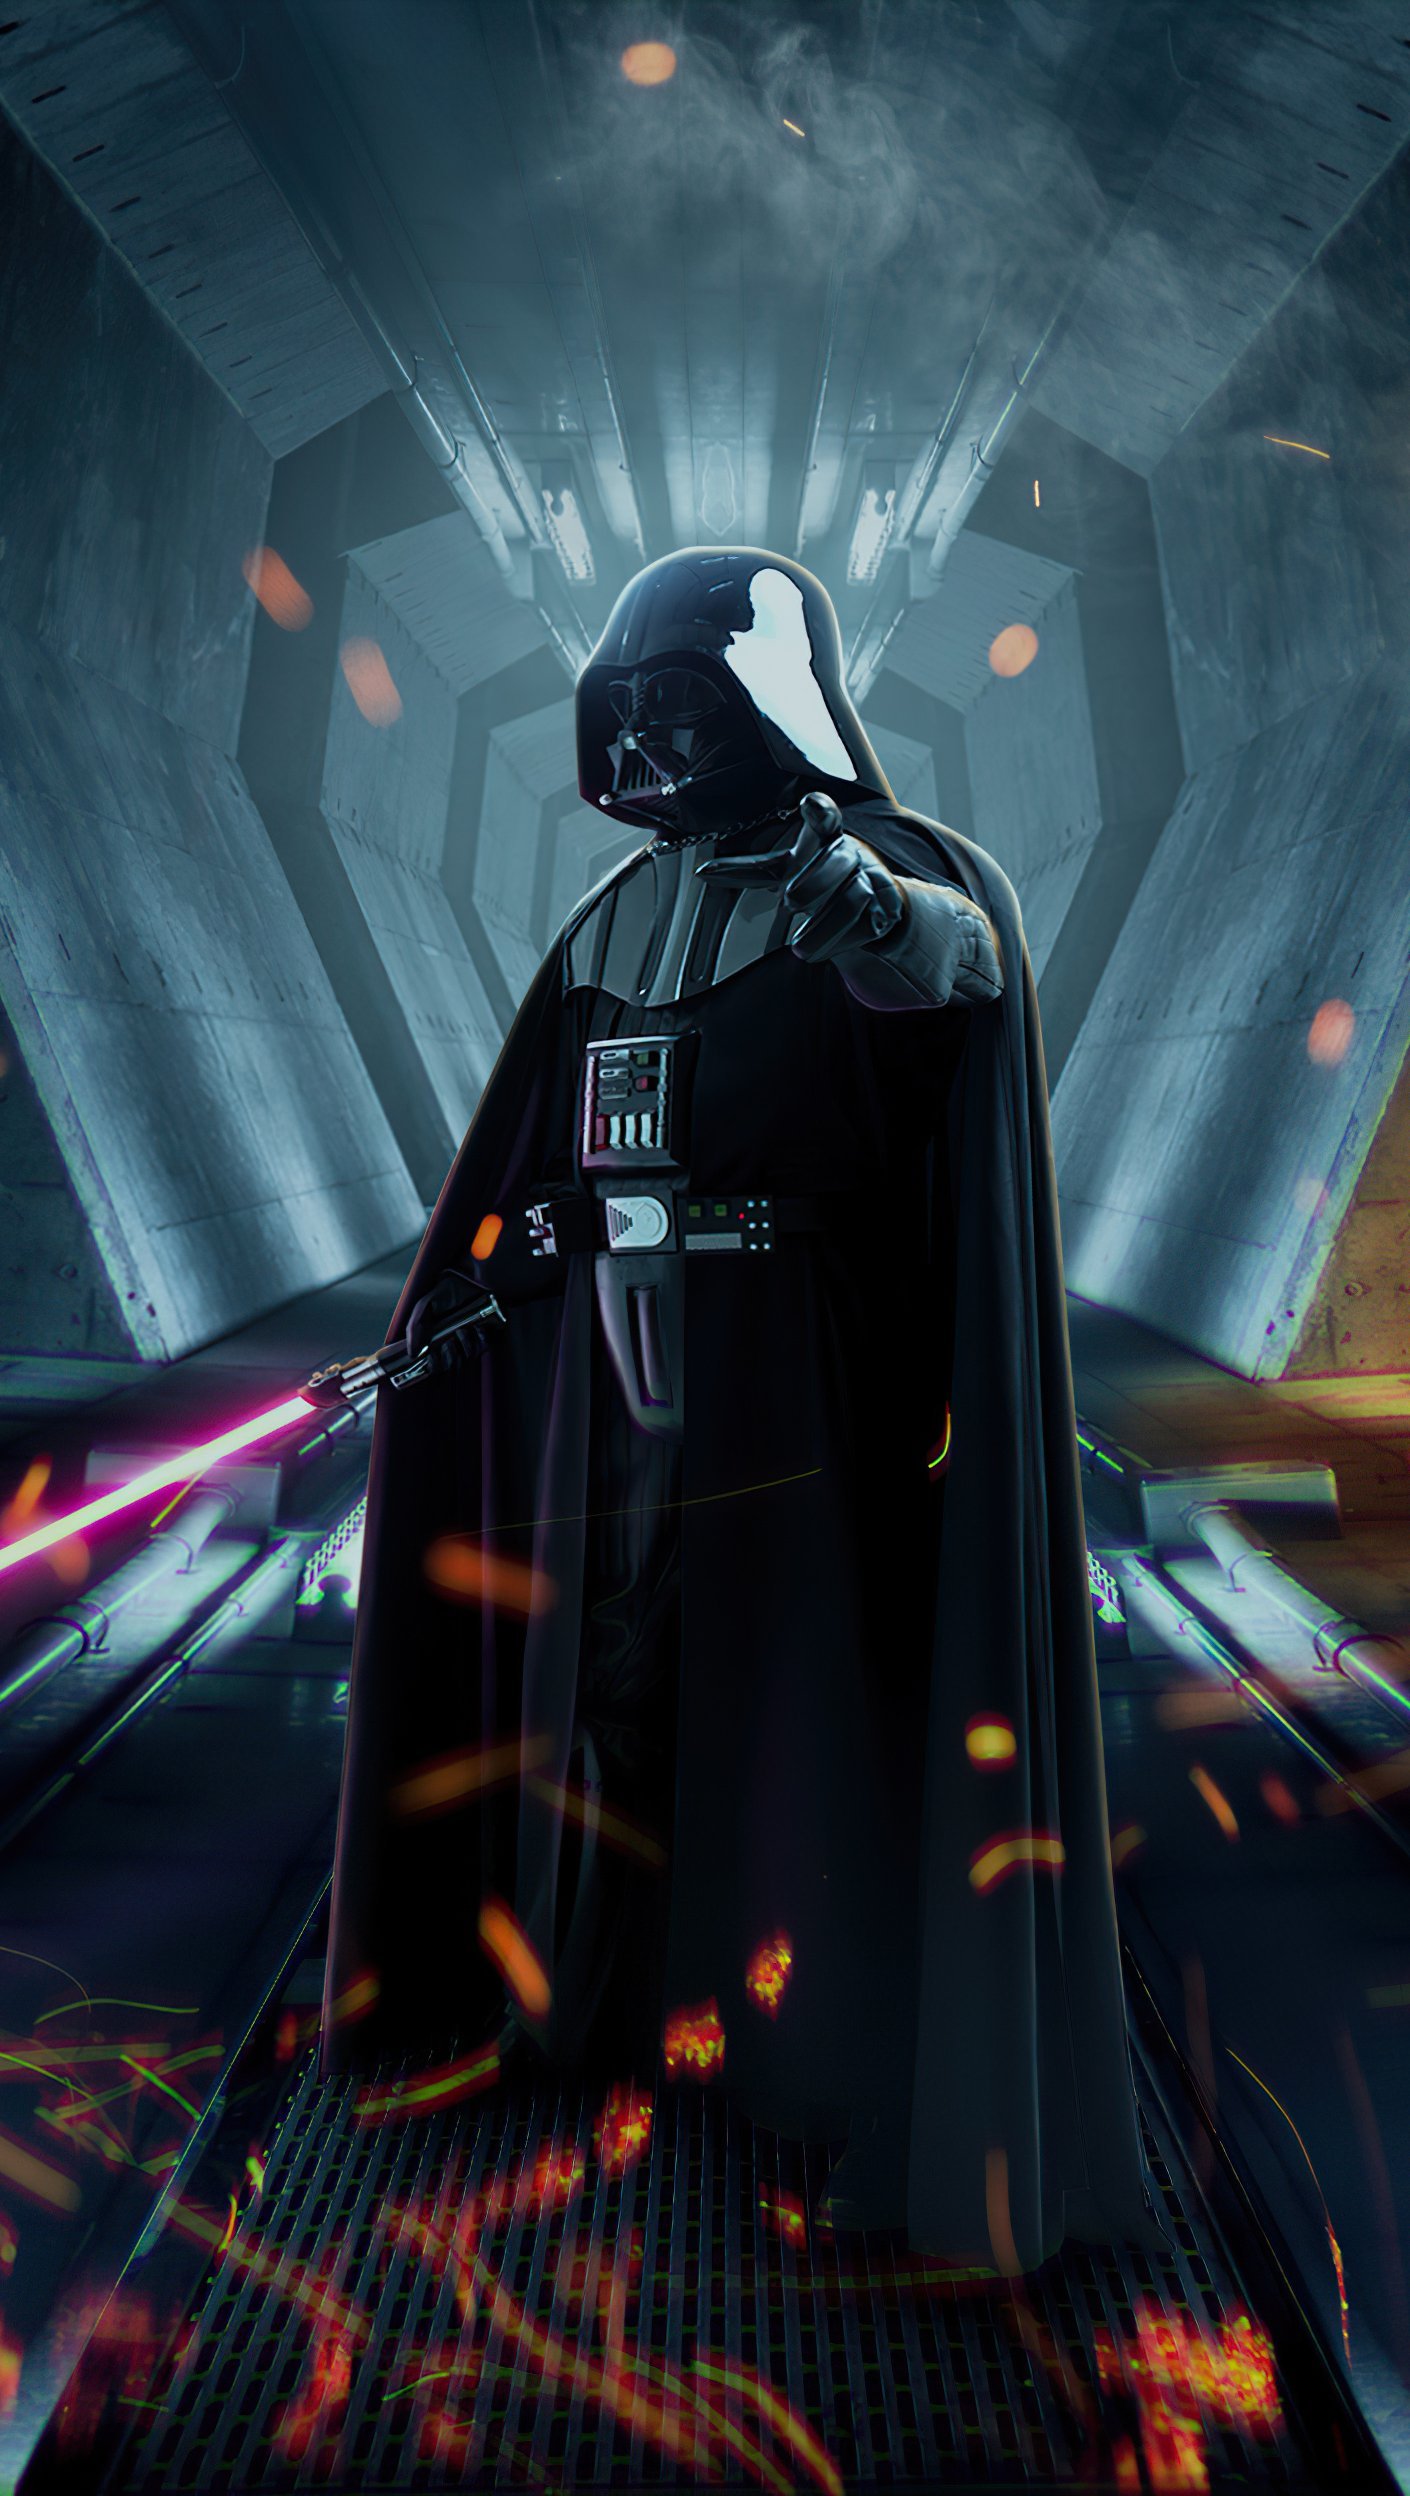 Darth Vader from Star Wars Fanmade Wallpaper 4k Ultra HD ID:8821